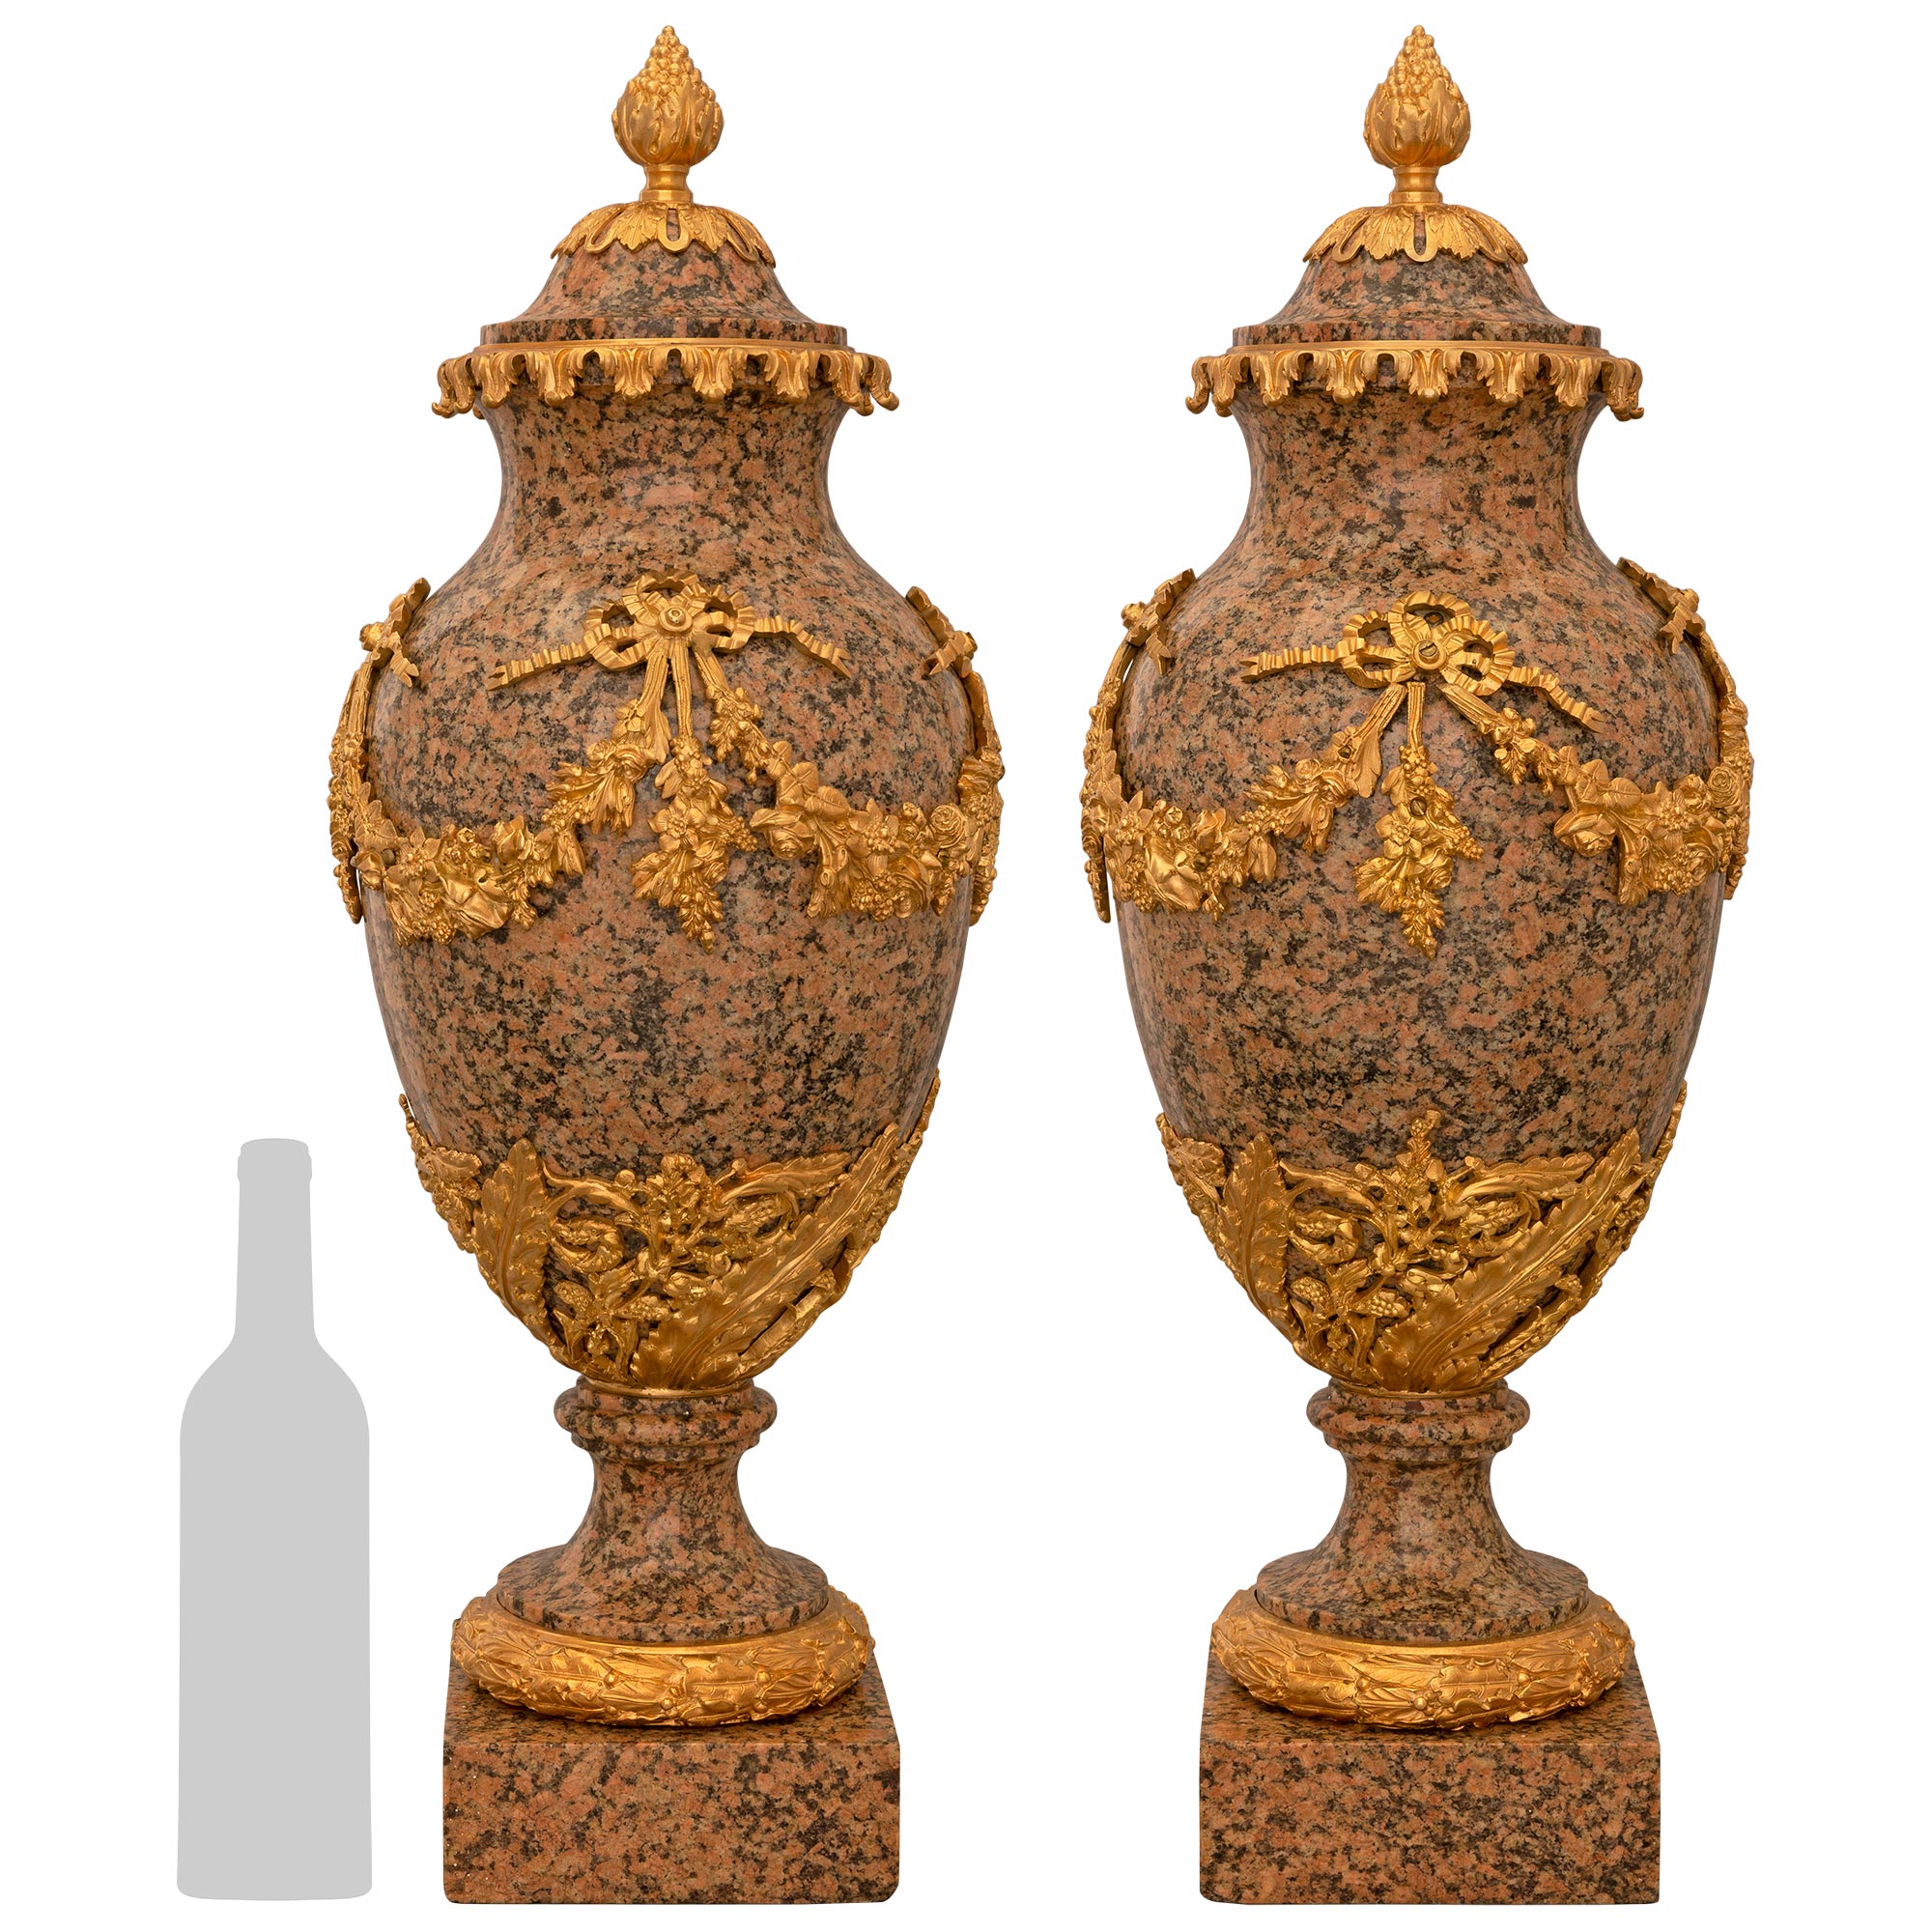 Pair of 19th Century Louis XVI Style Granite and Ormolu-Mounted Lidded Urns